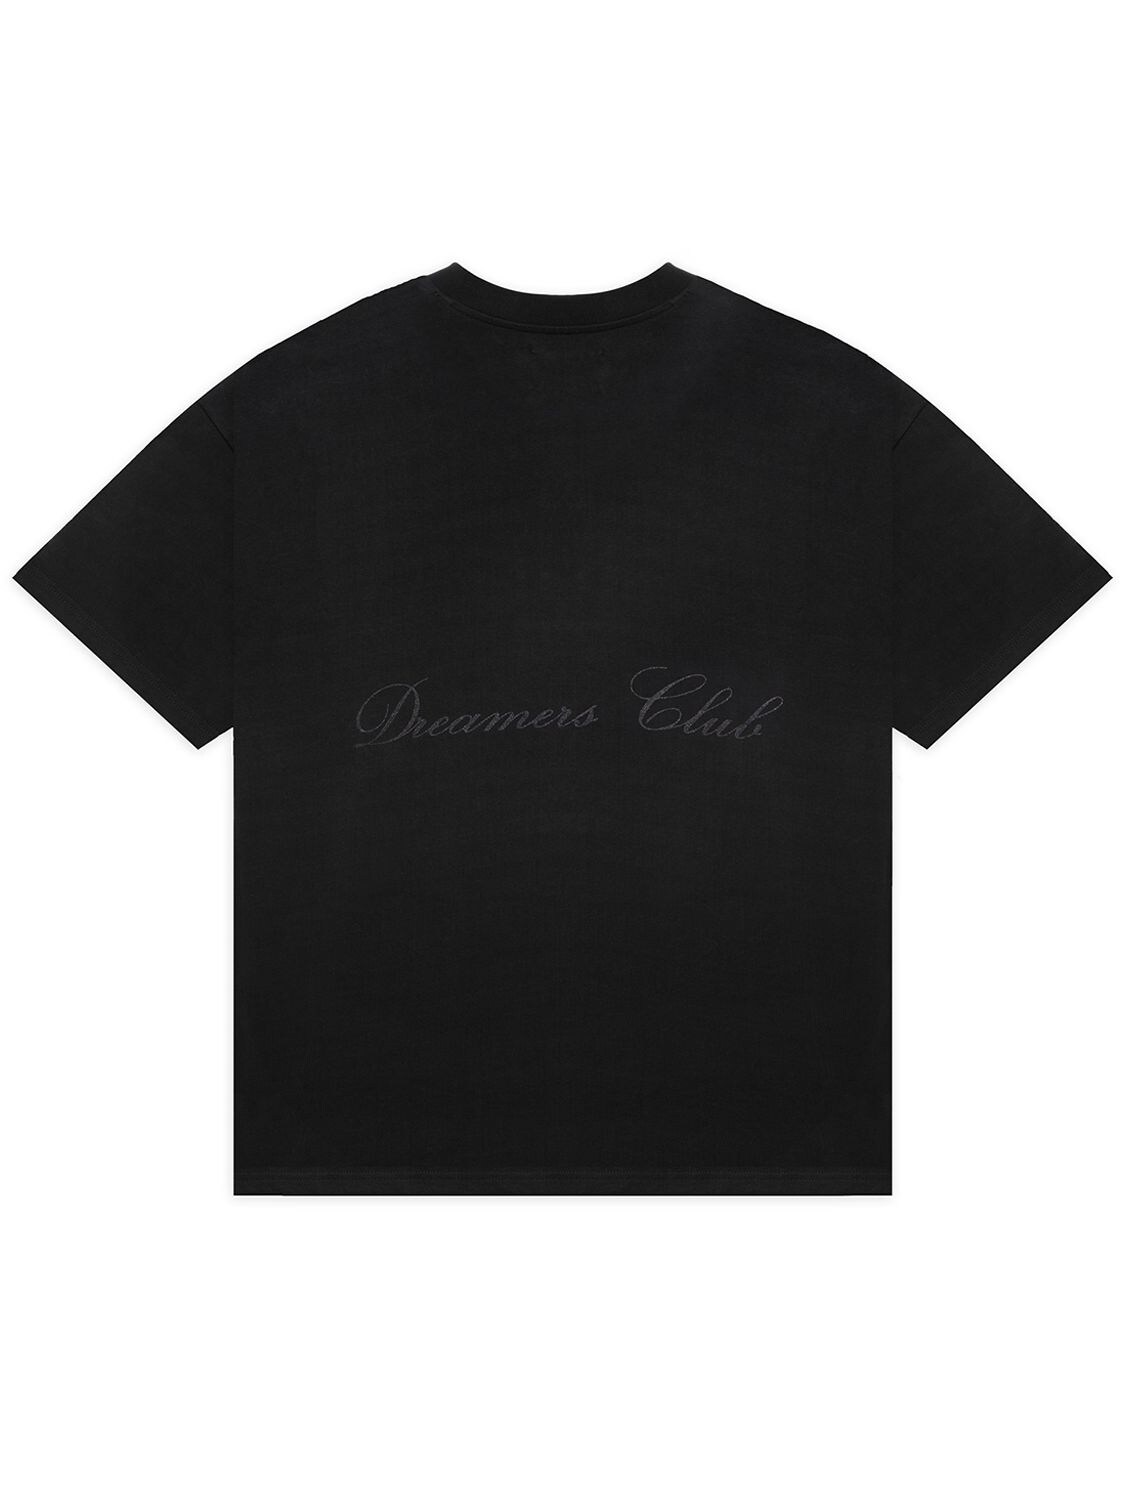 Dreamers Club コットンtシャツ